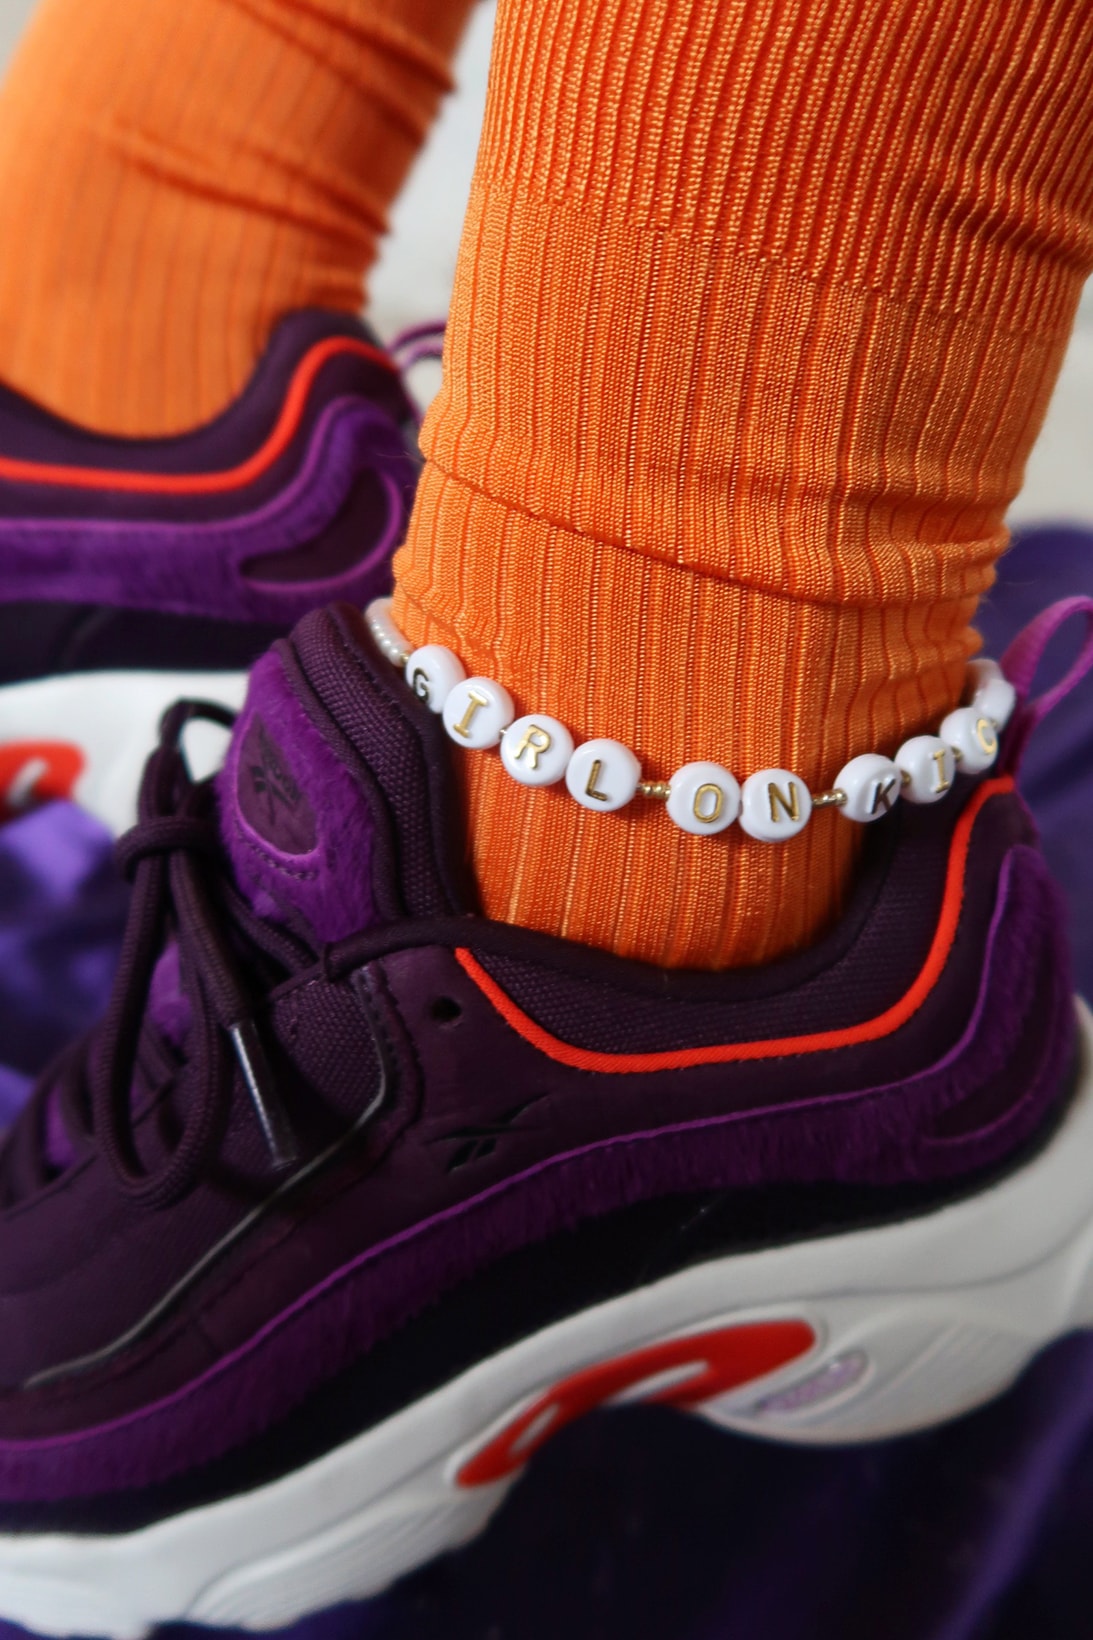 reebok sanne poeze girl on kicks collaboration daytona dmx sneakers its a mans world campaign purple 